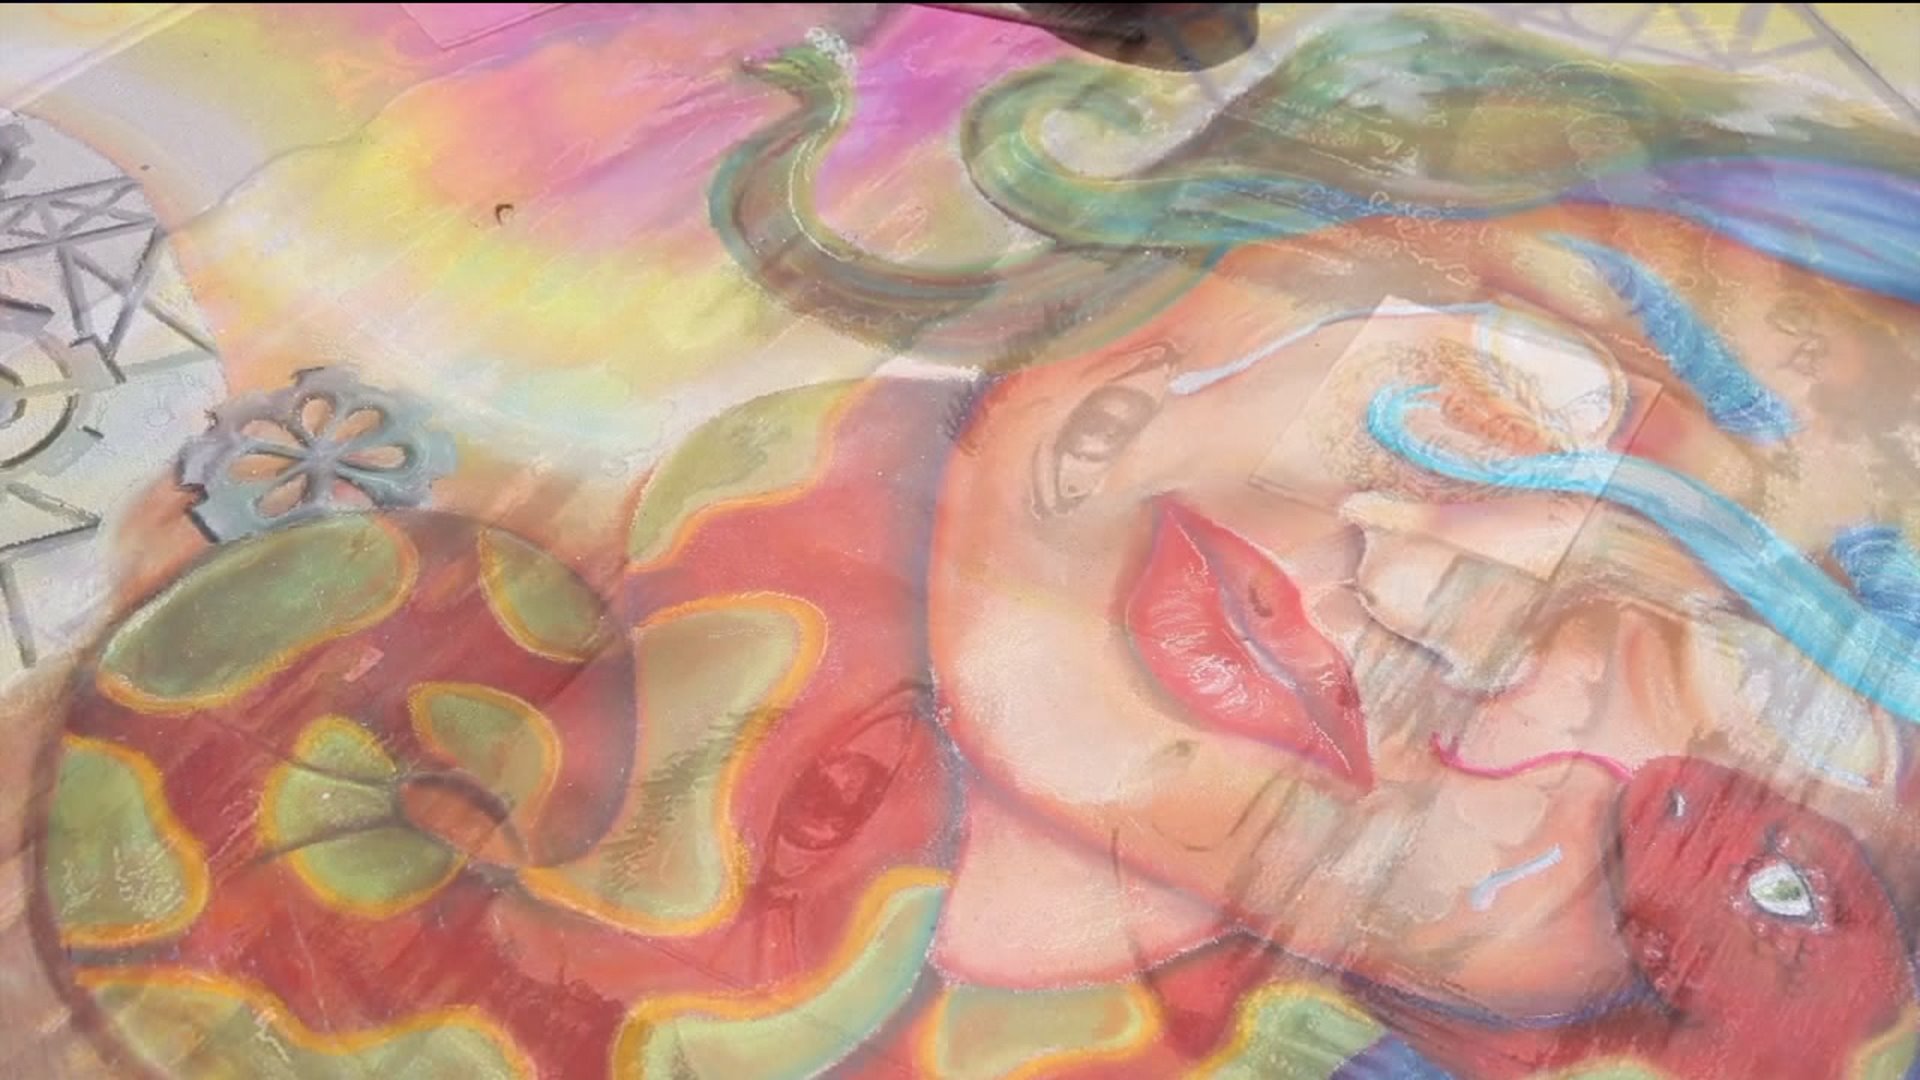 Chalk Art Festival kicks off a colorful summer in Larimer Square ...